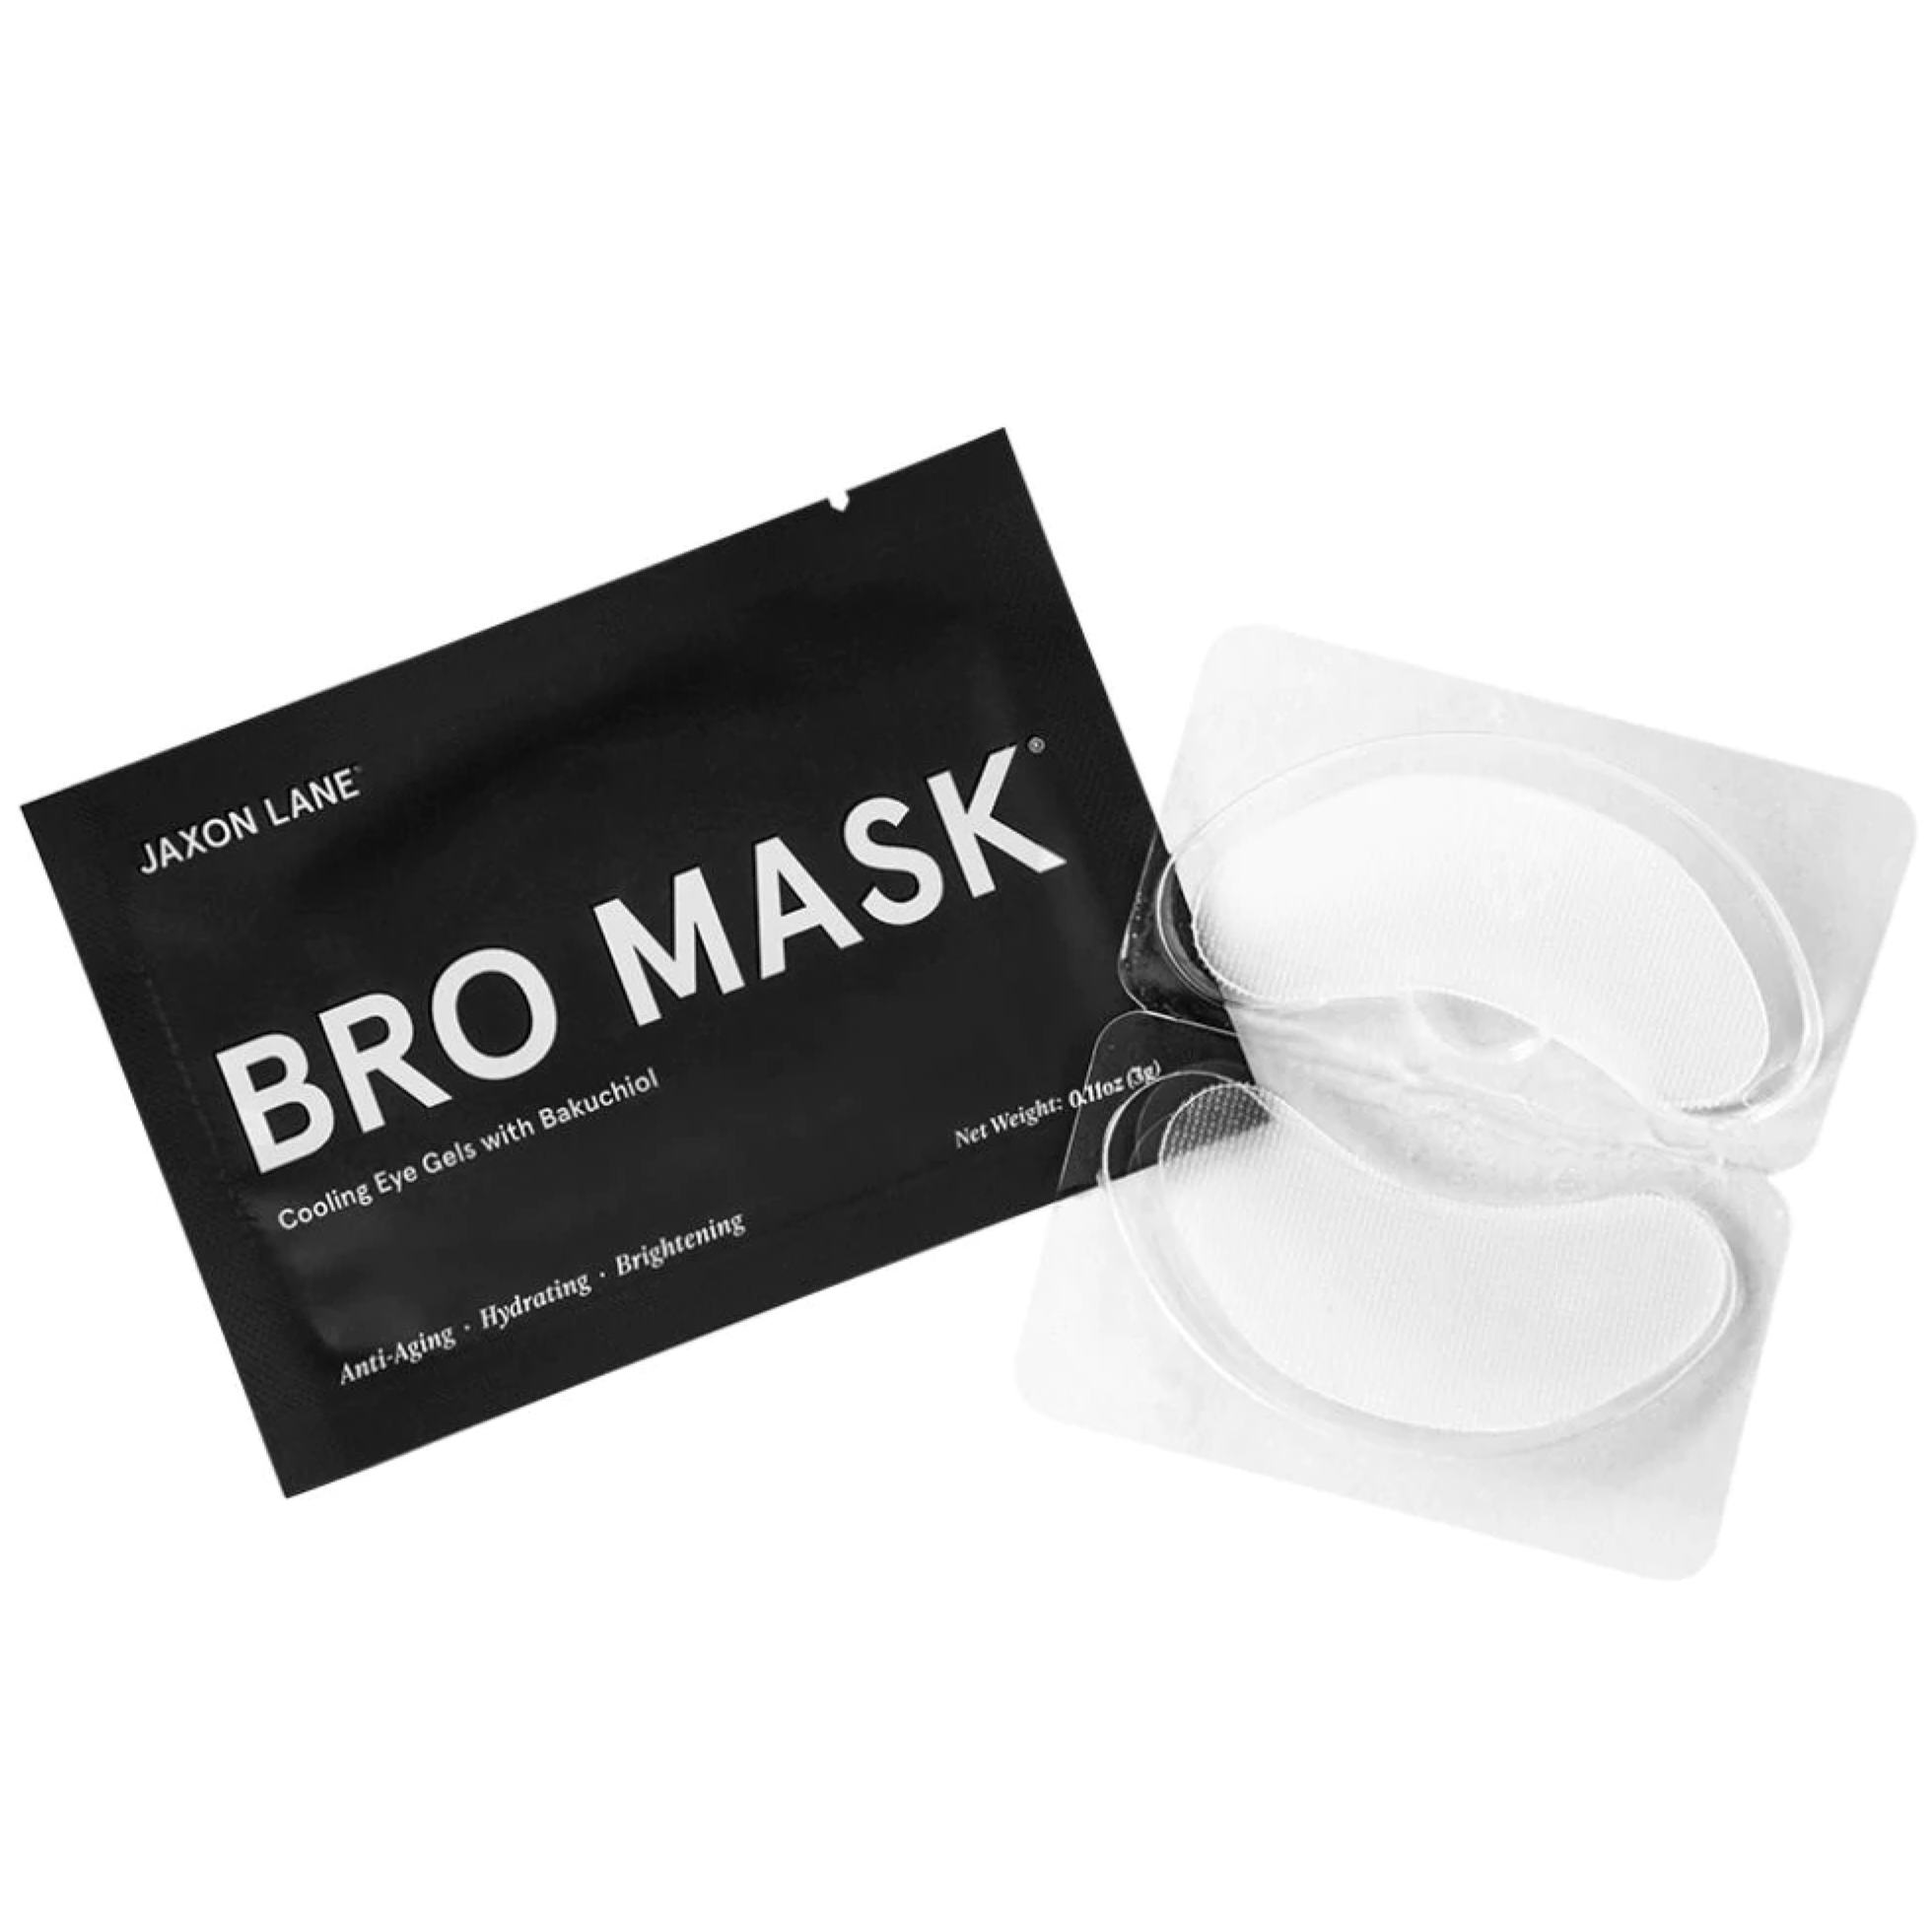 Bro Mask Cooling Eye Gels